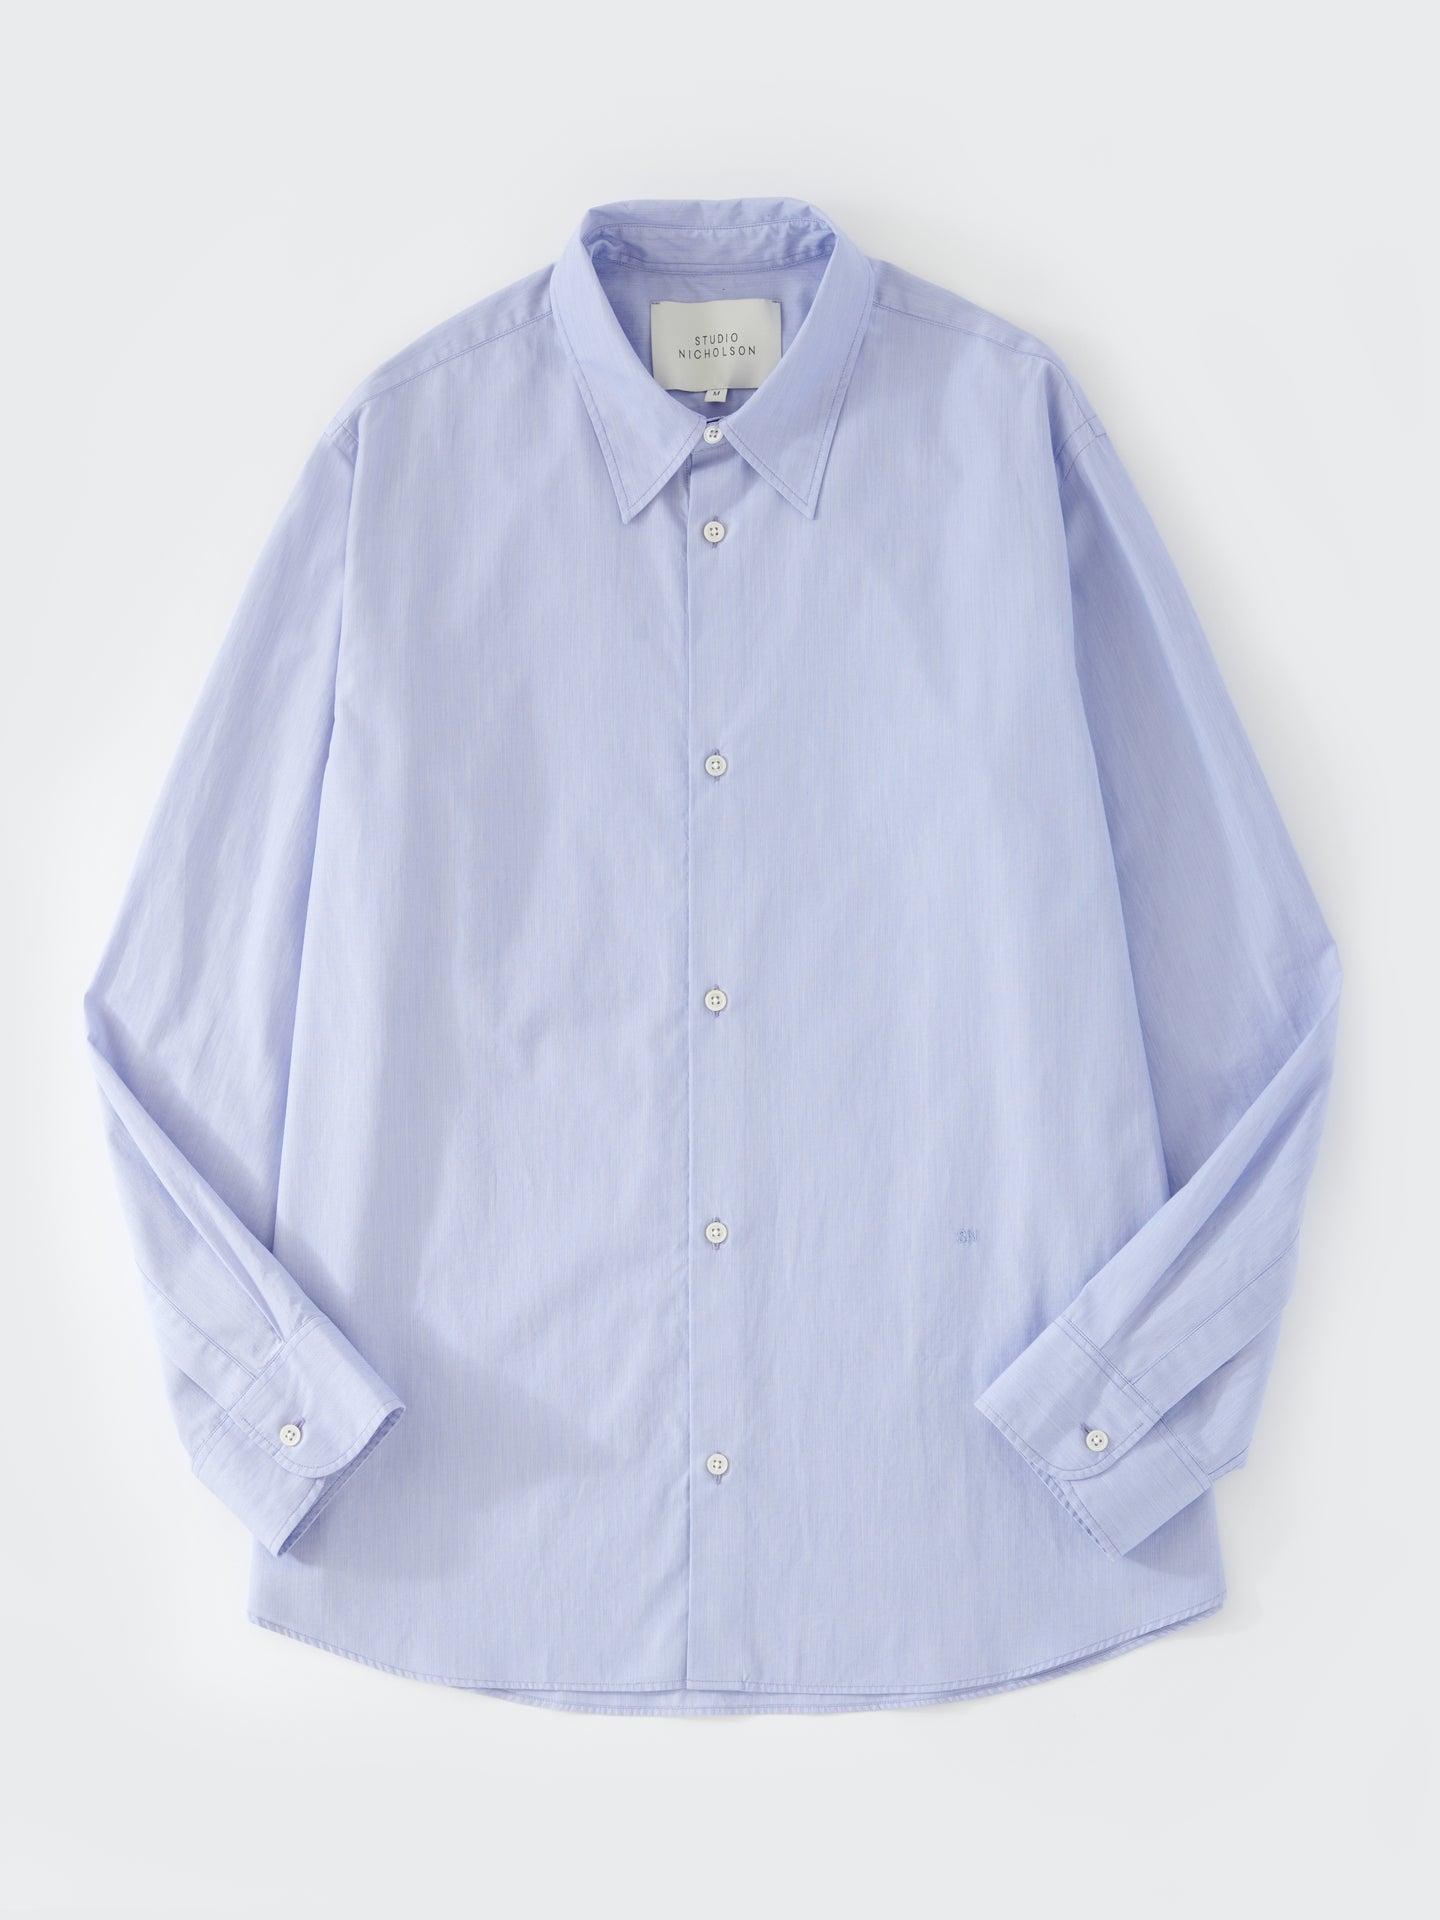 Mens Shirts | Capsule Wardrobe Staples For Work & Leisure– Studio Nicholson